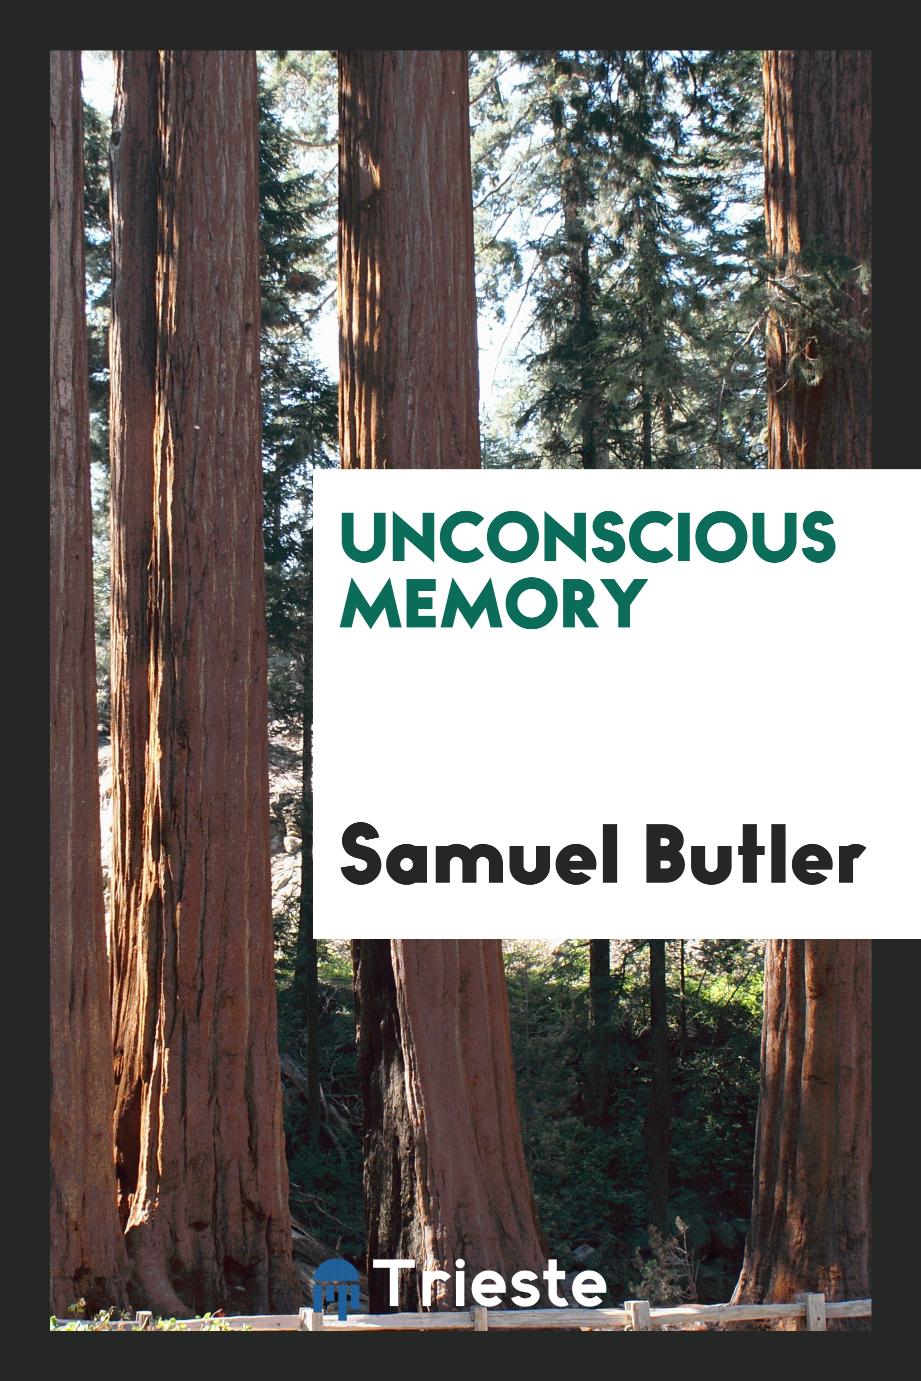 Unconscious memory